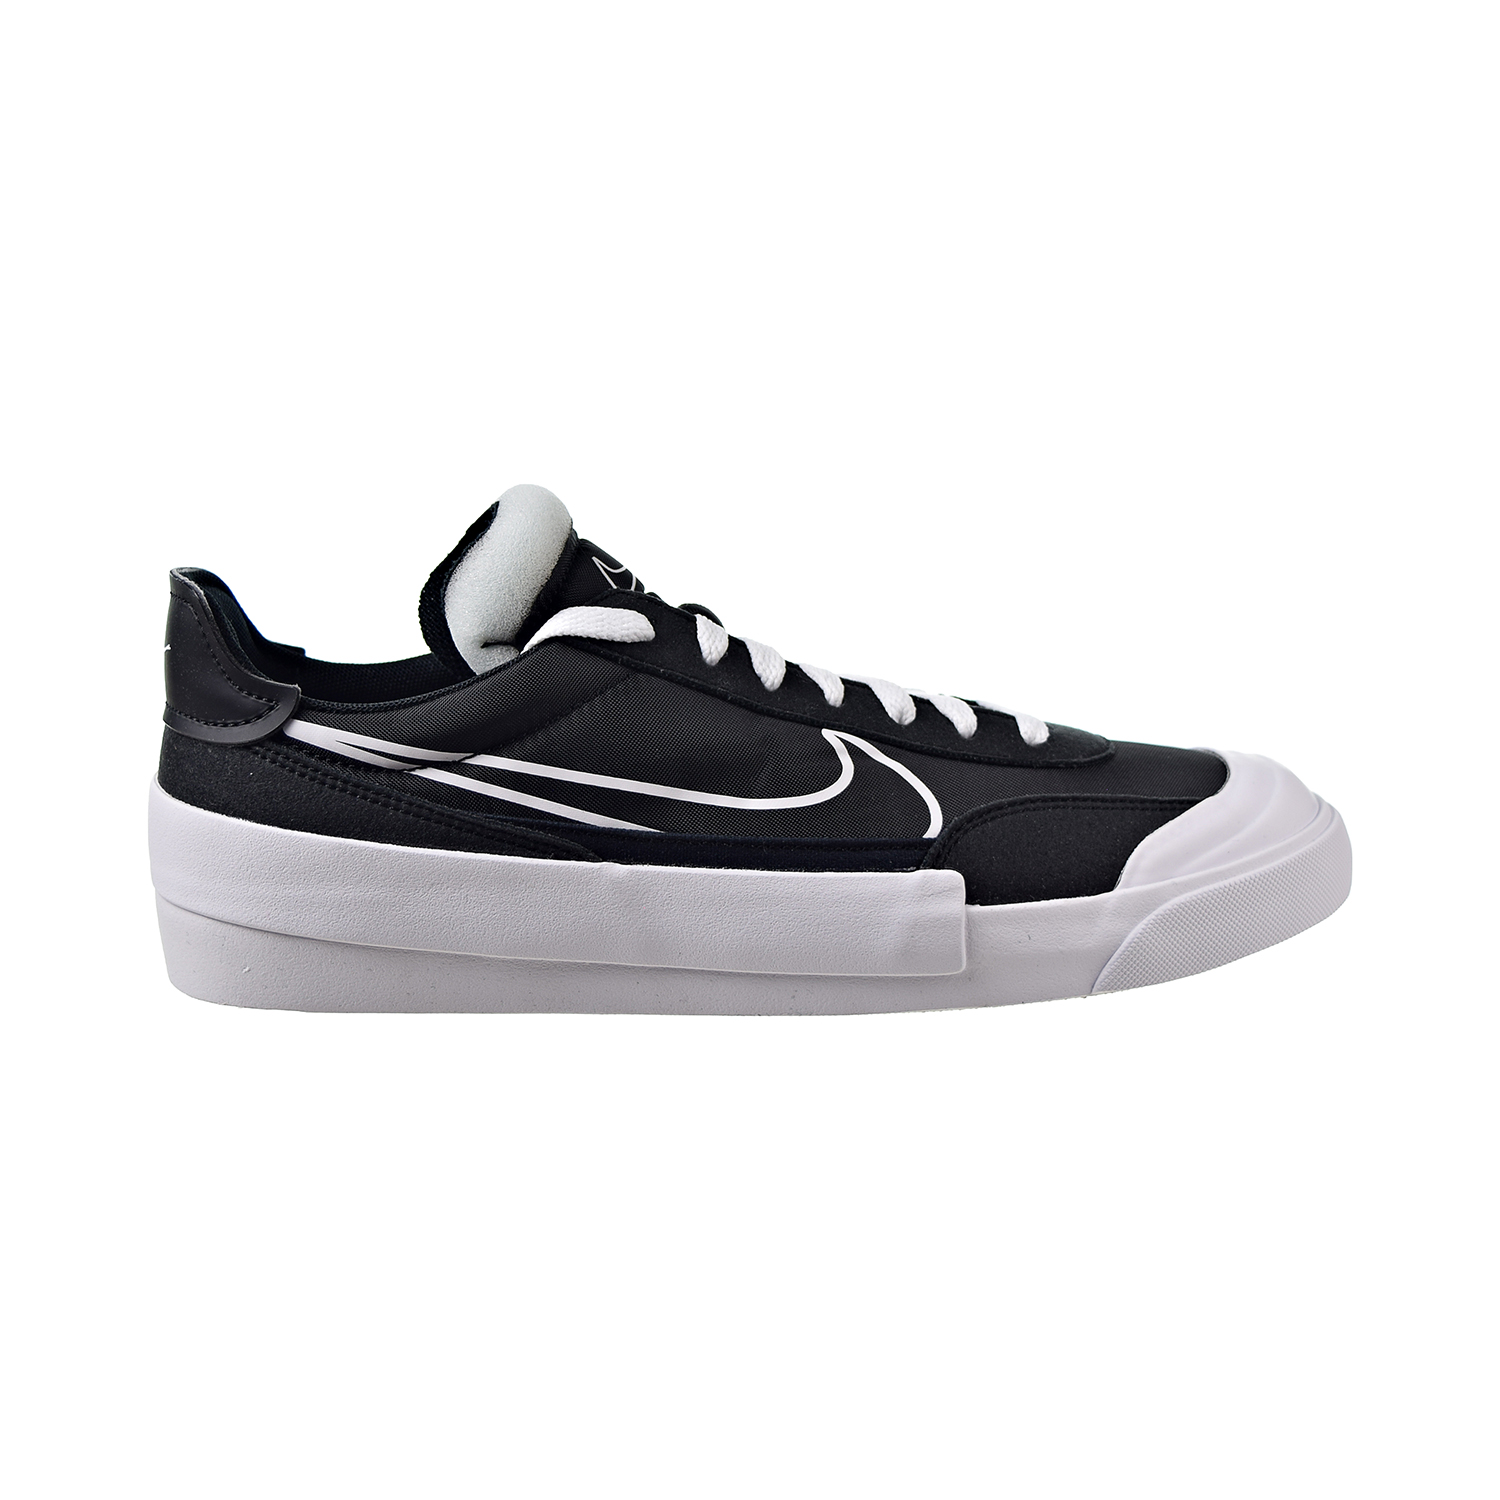 Nike Drop-Type Hybrid Men's Shoes Black-White cq0989-002 - image 1 of 6